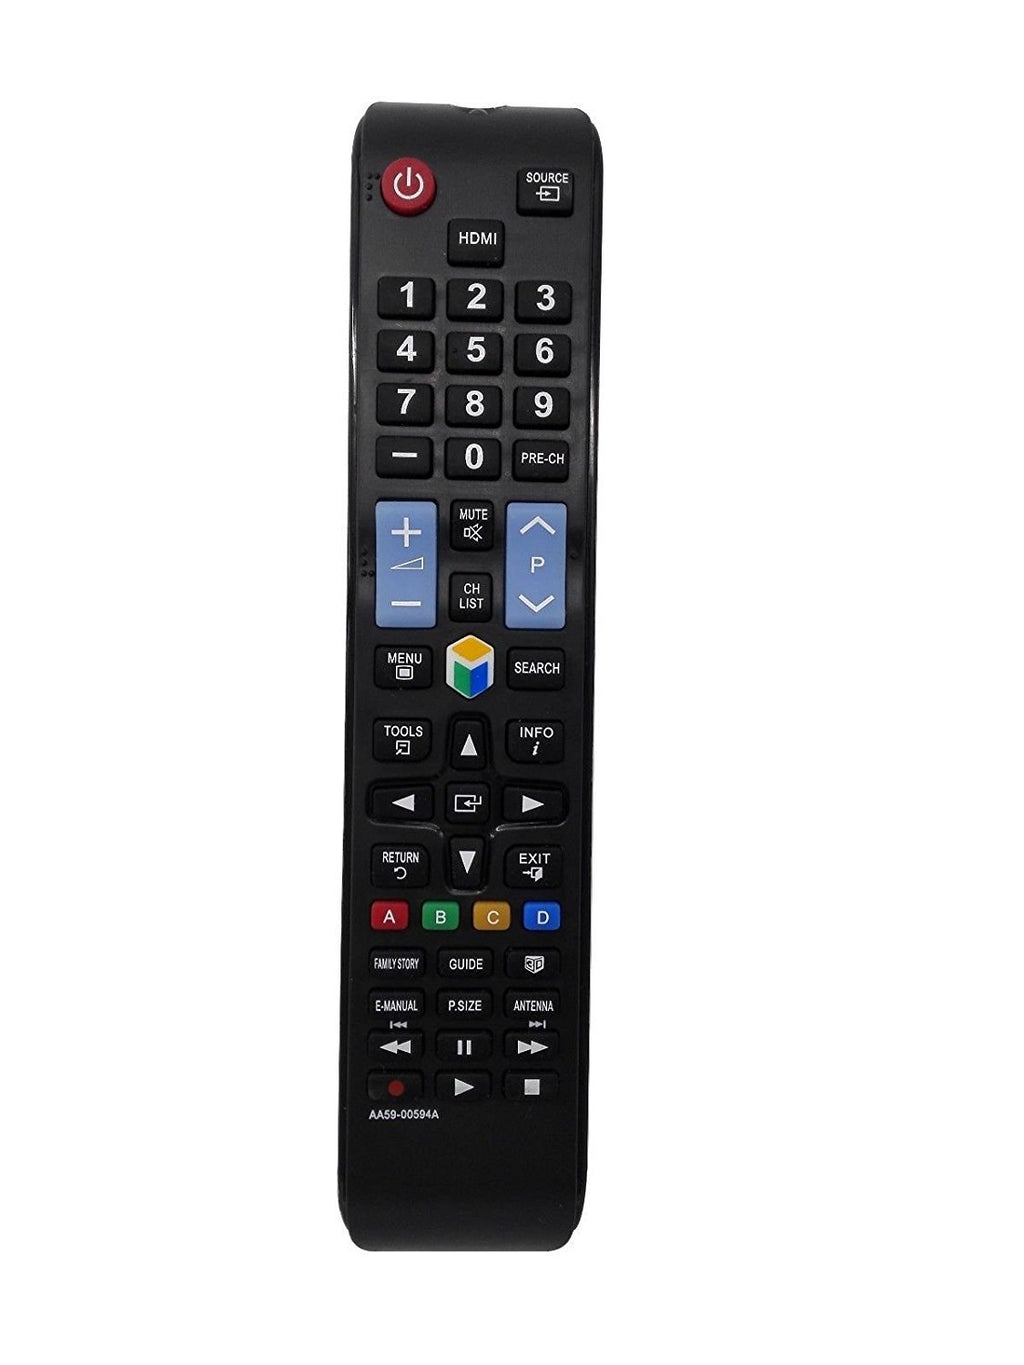 Smartby Remote Control for Samsung AA59-00594A Smart 3D TV Such as UN46D7000 UN55F7100 UN40D6000S UN49KU6500 UN55D8000 UN55F7450AFXZA PN60F5500 UN55F7450A UA55F6400AJXXZ UA55F8000AJ UN65F7100